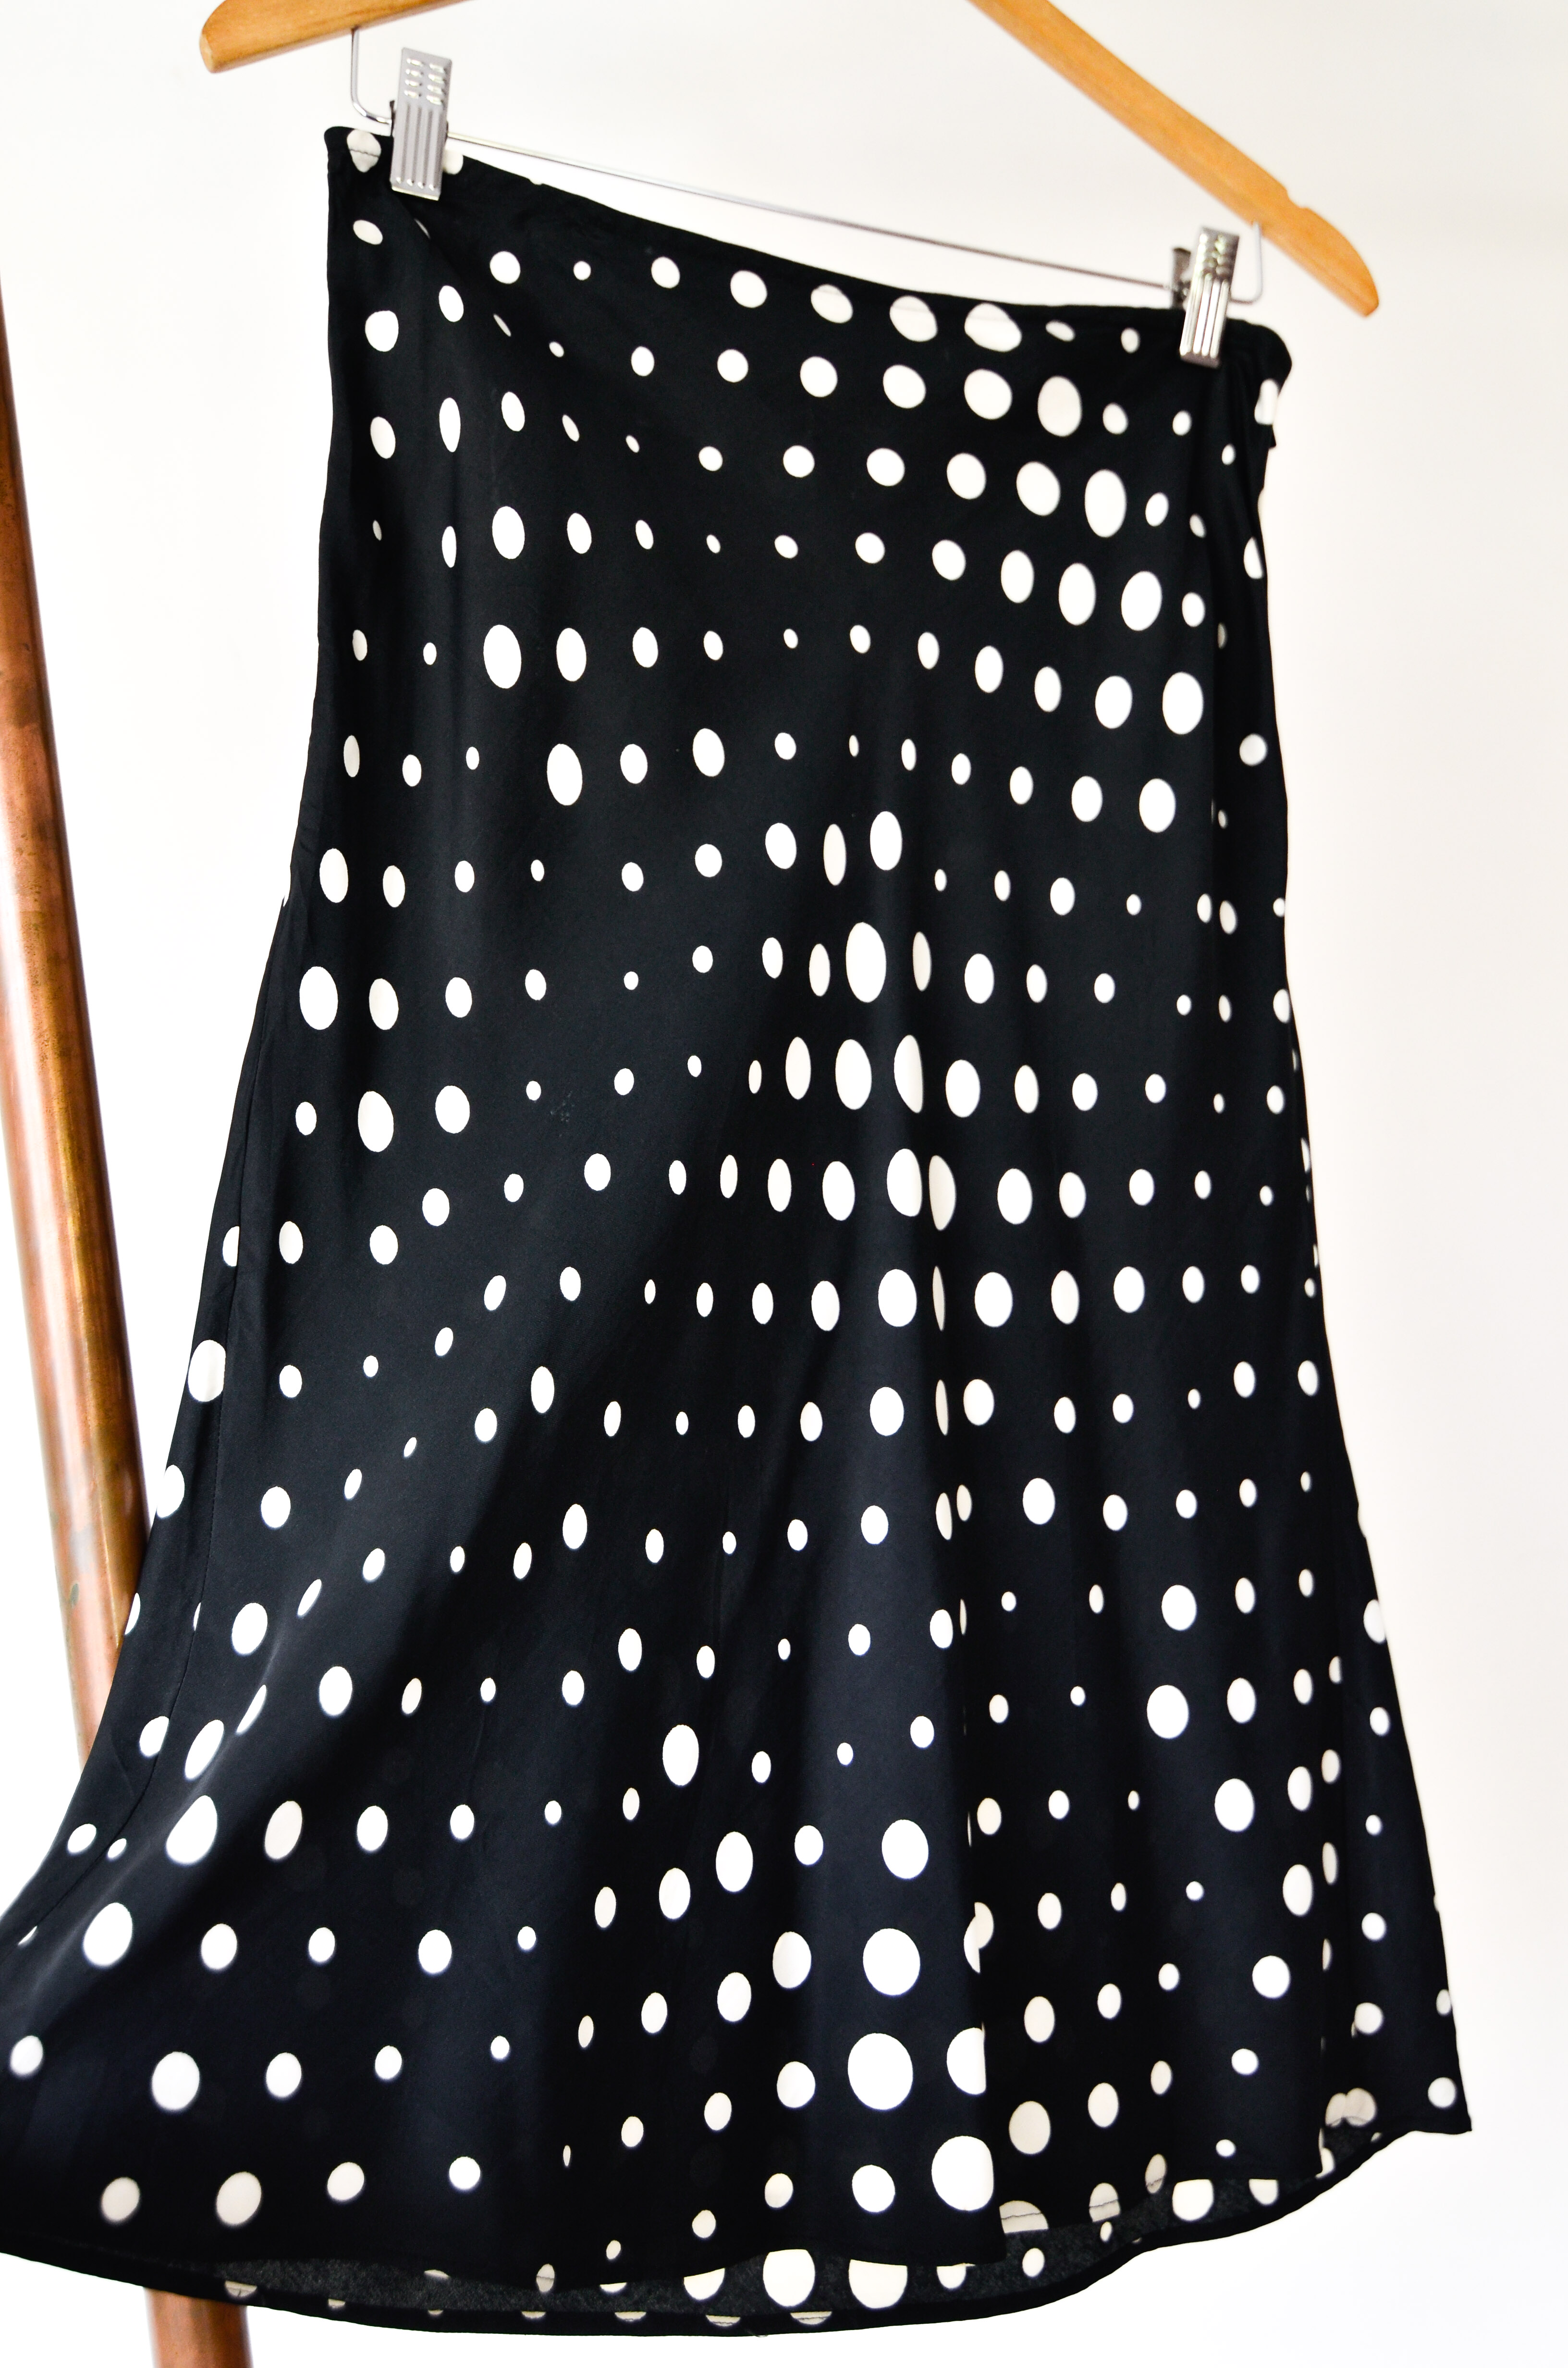 Falda negra polka dots 90s